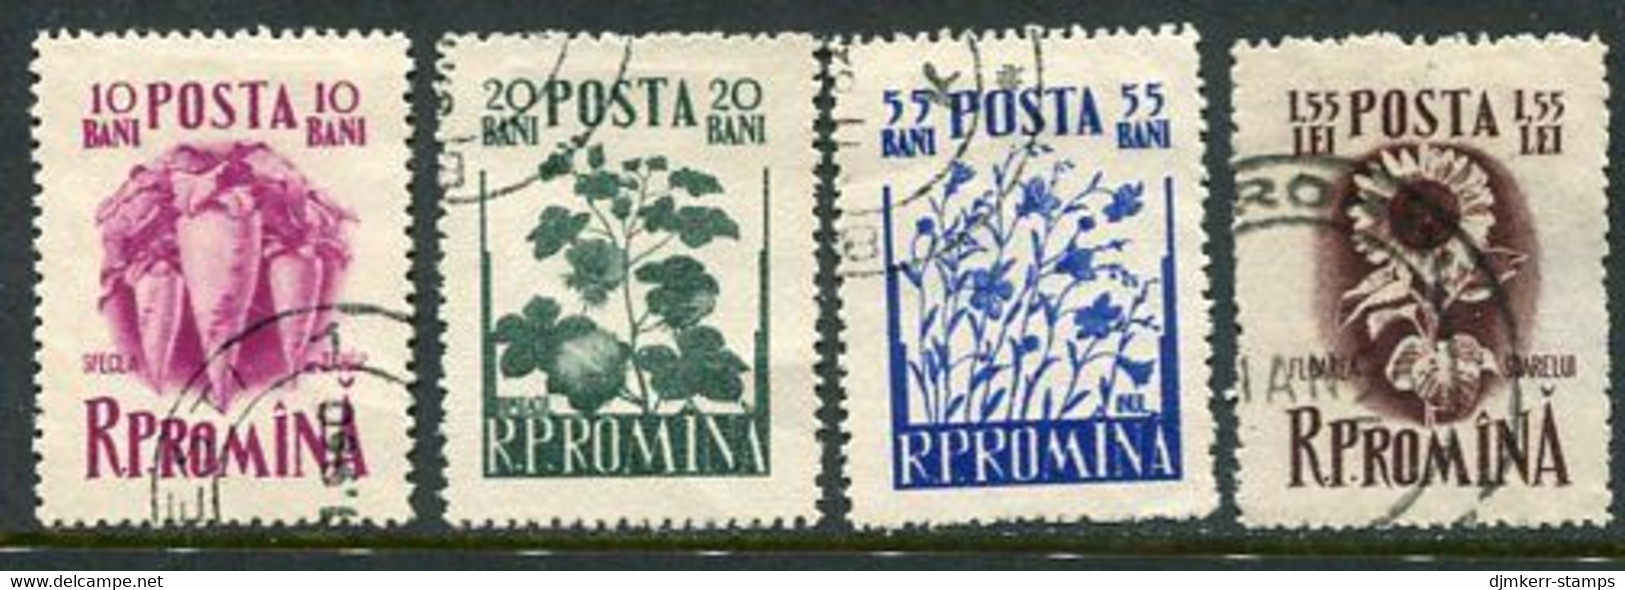 ROMANIA 1955 Agricultural Plants Used.  Michel 1547-50 - Gebruikt